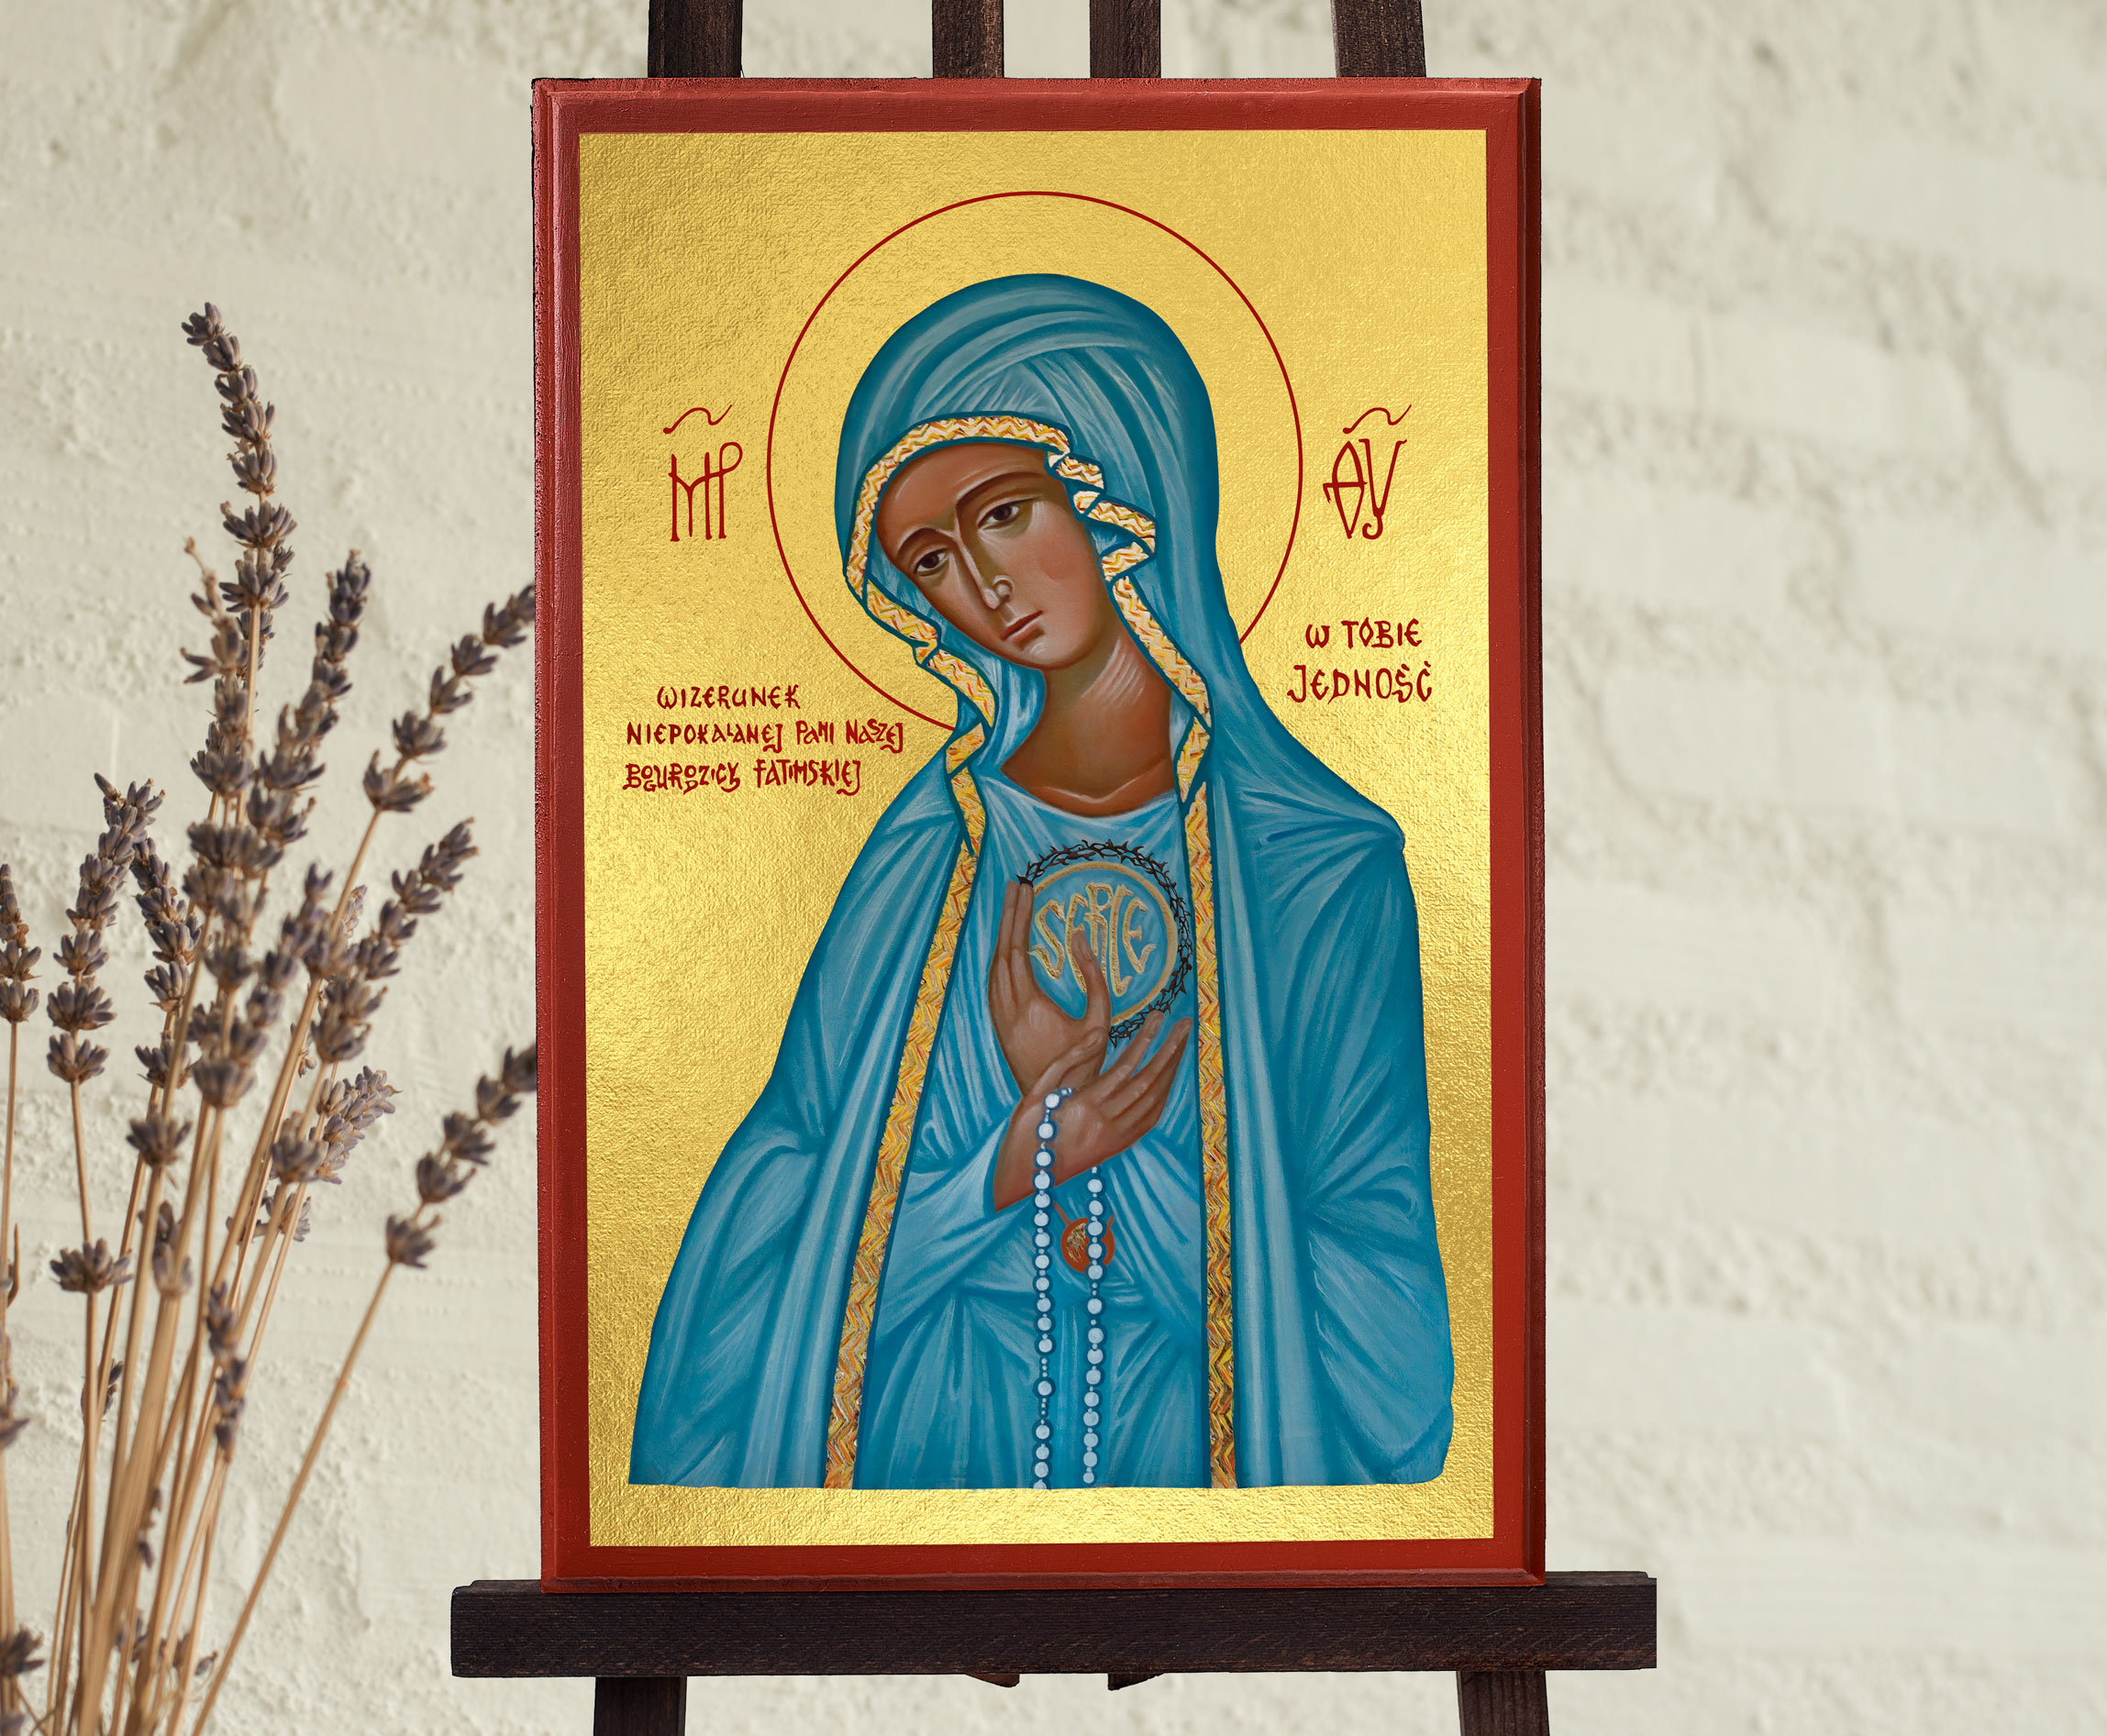 Matka Boża Fatimska - Ikona religijna